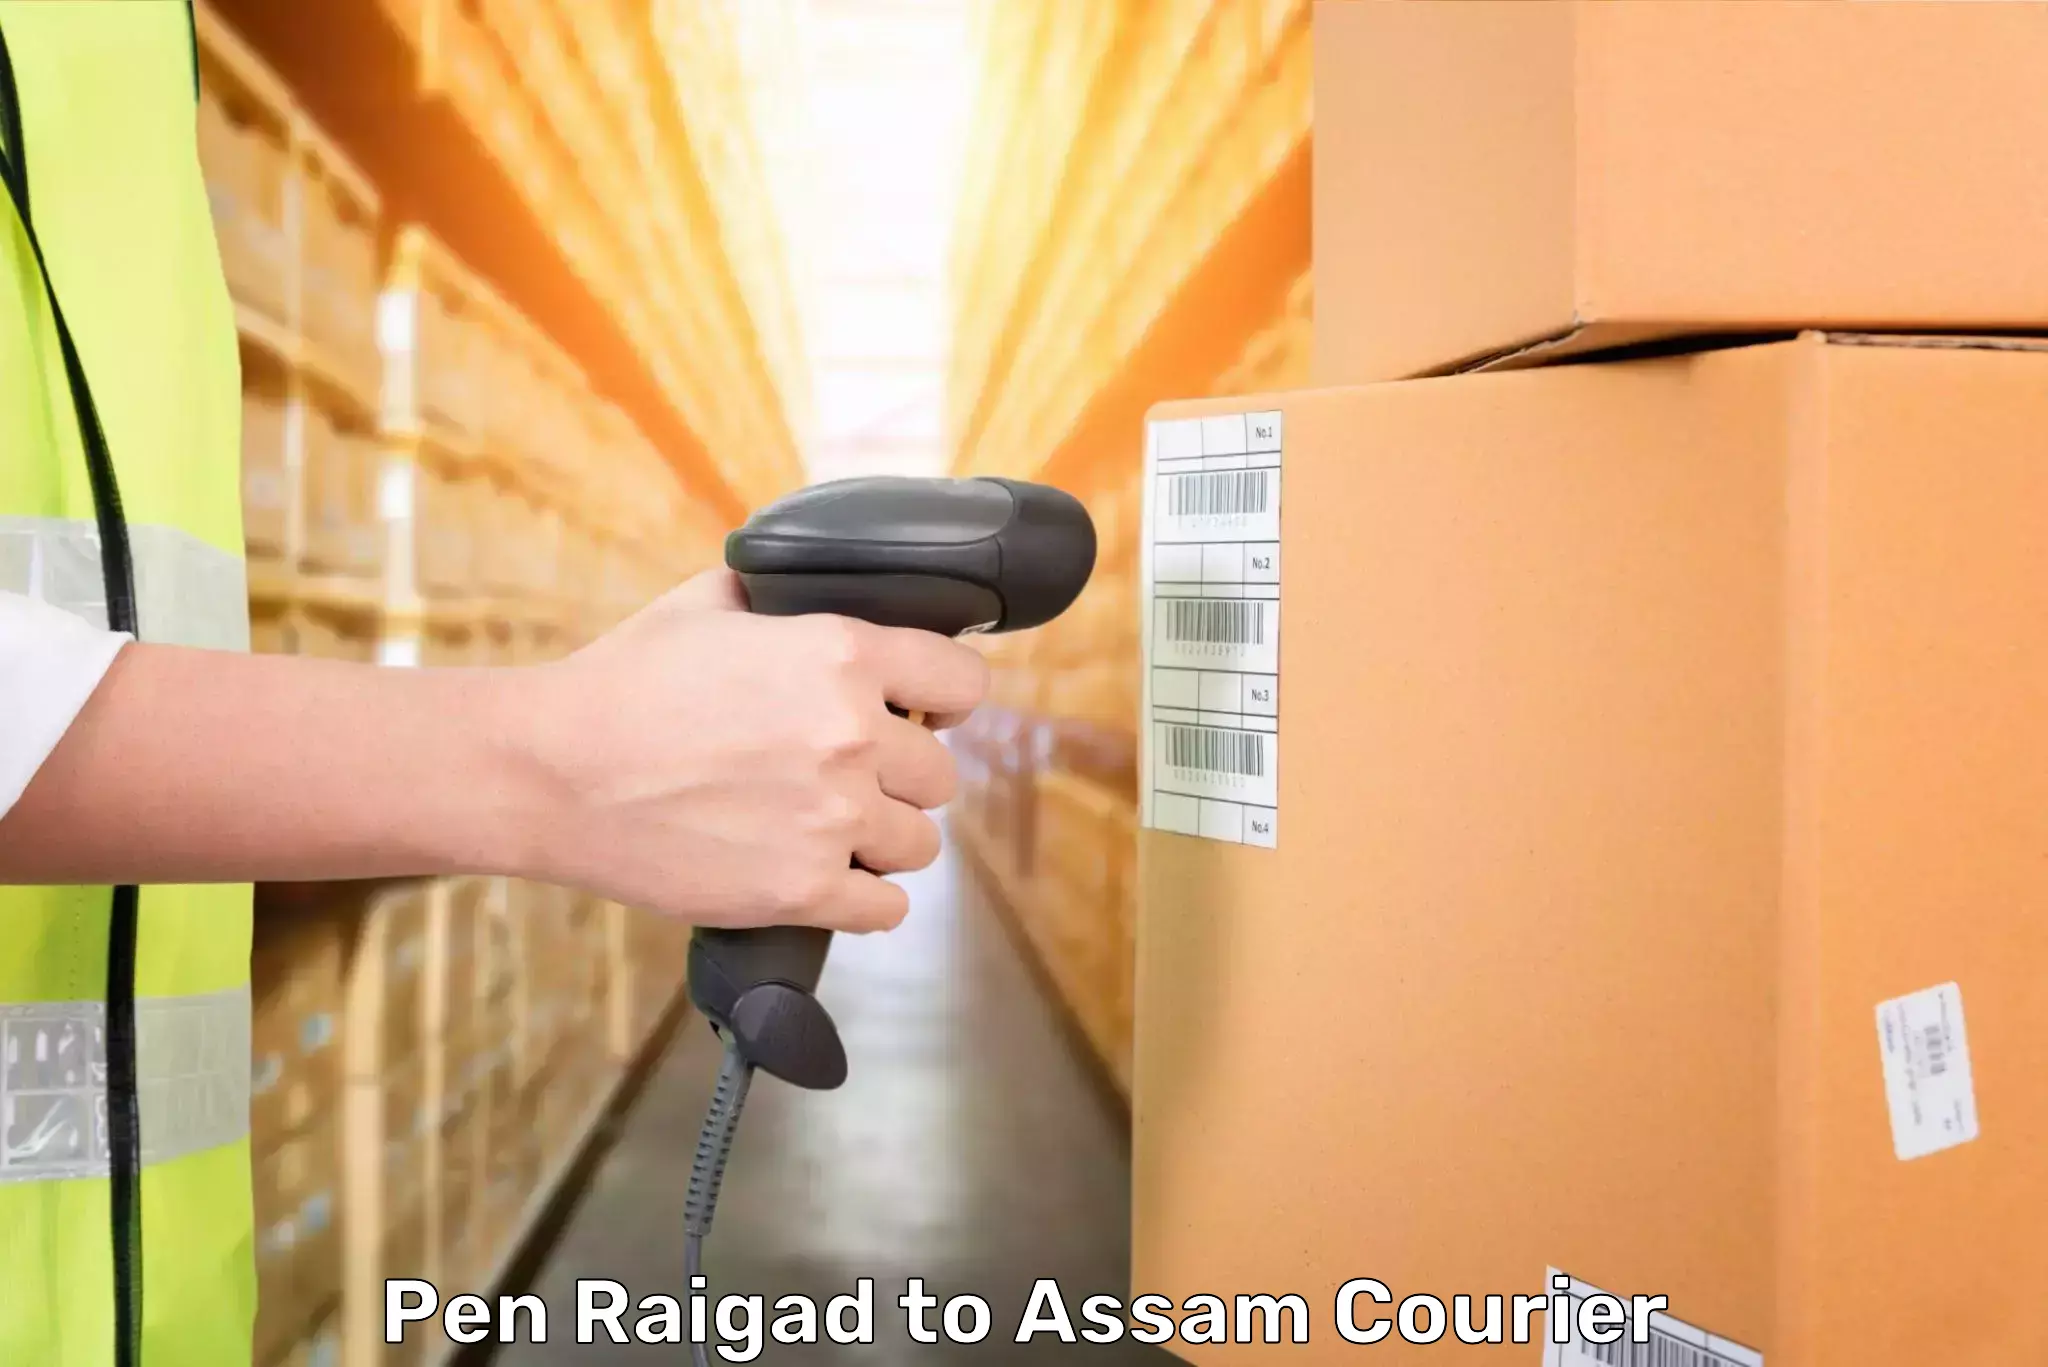 Baggage transport network Pen Raigad to Assam